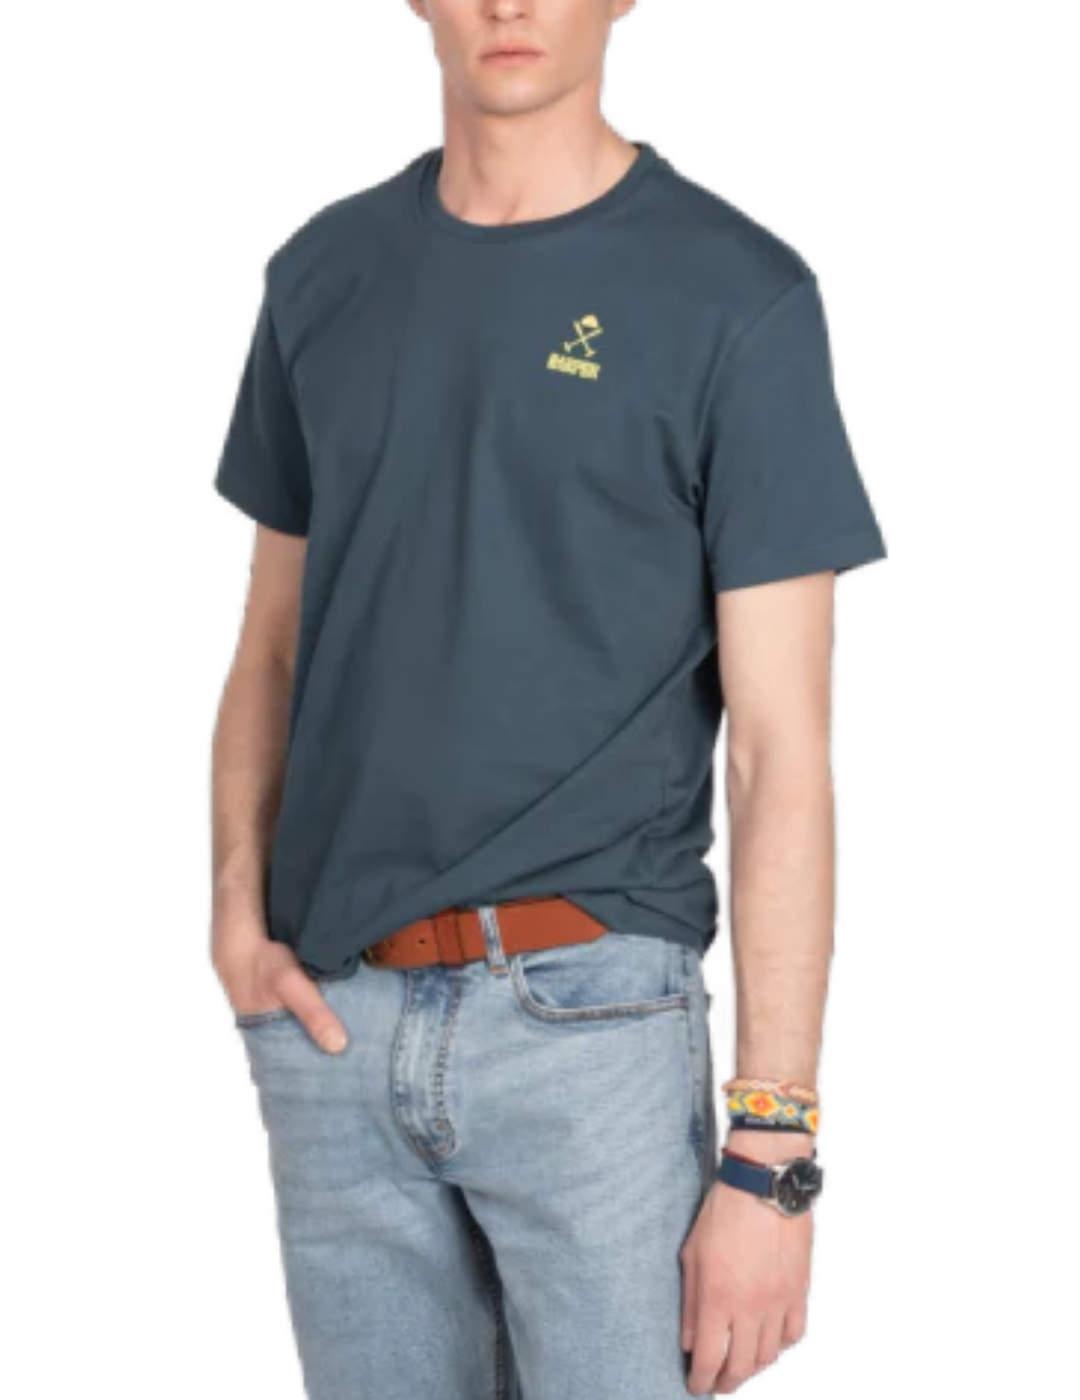 Camiseta Harper Waves marino manga corta para hombre